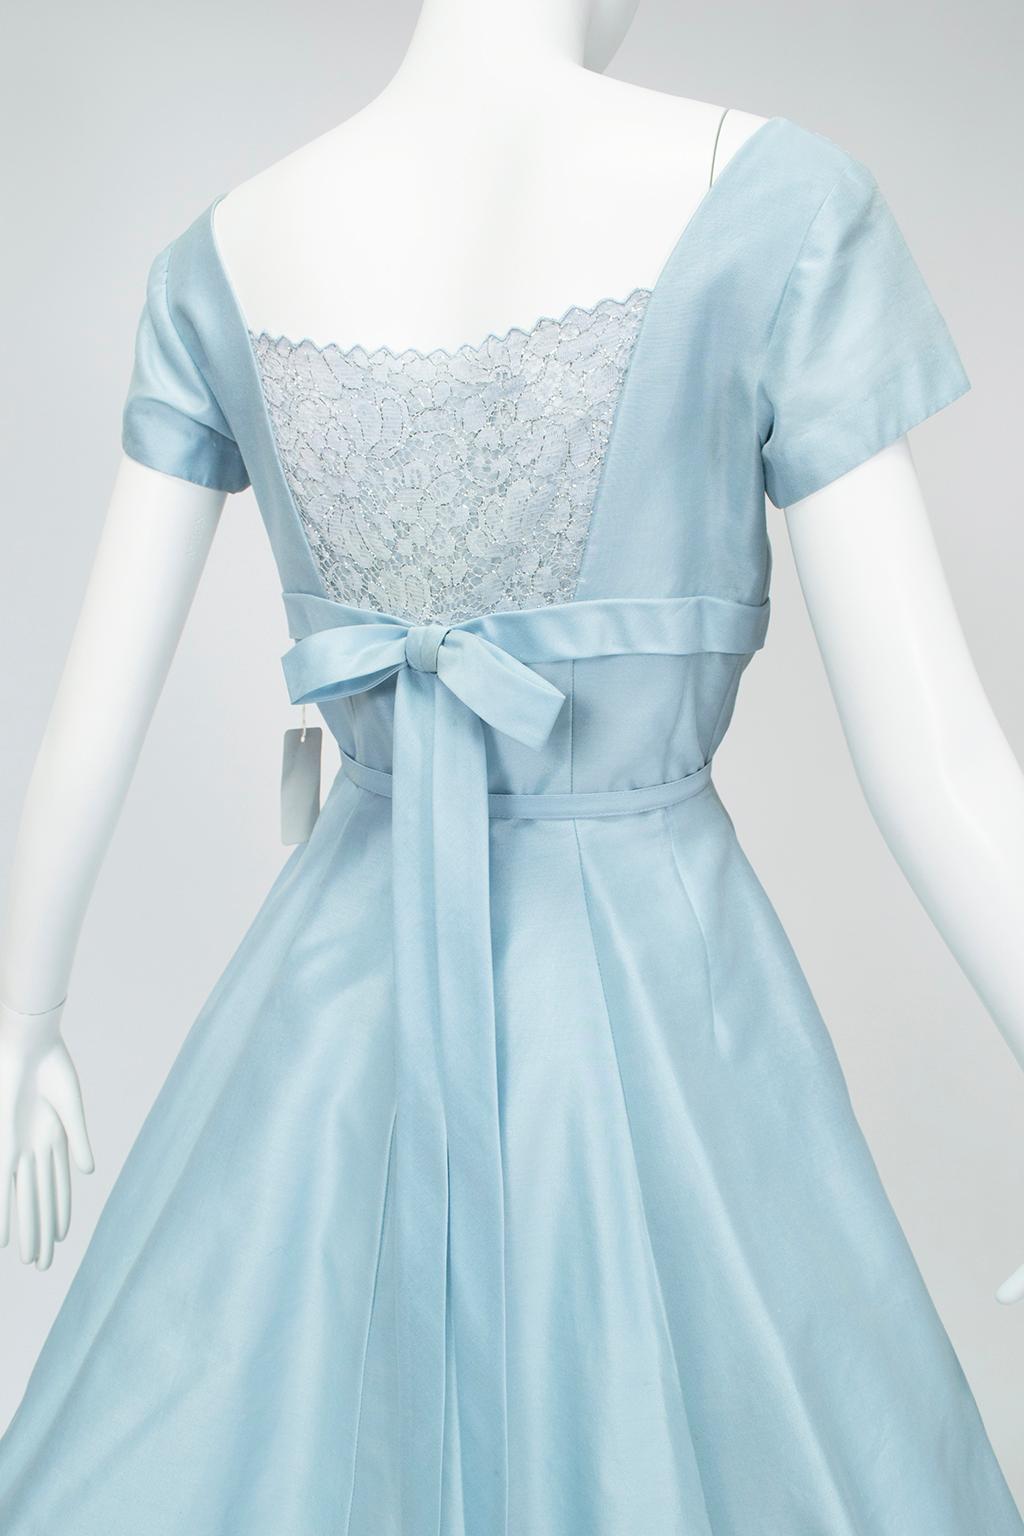 New Powder Blue Petal Shelf Bust Honeymoon Party Dress w Crinoline – M, 1953 For Sale 1